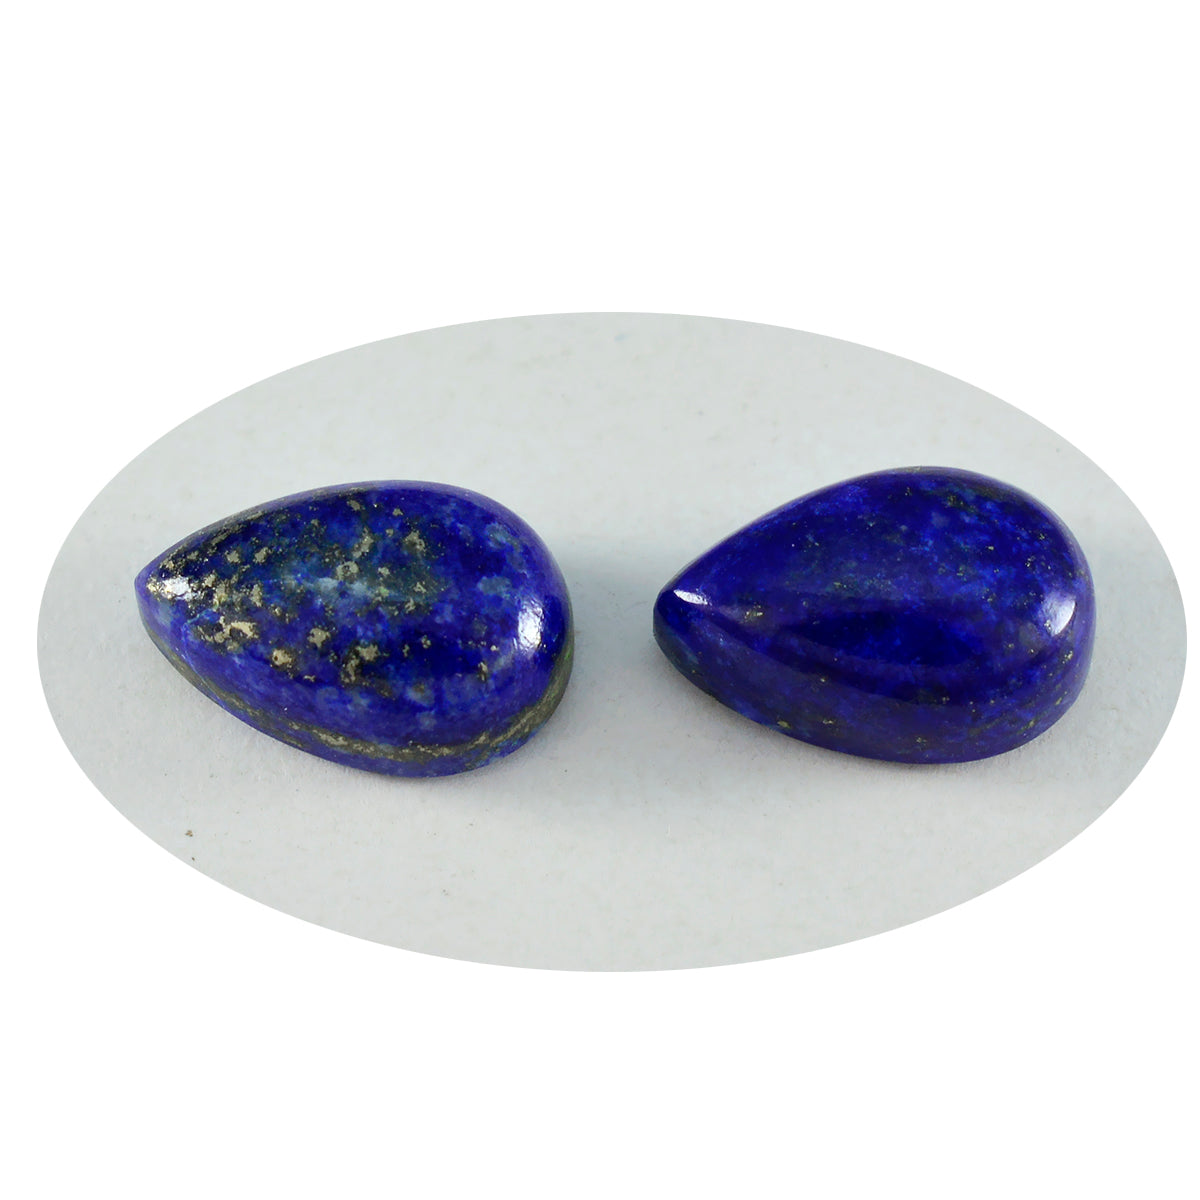 Riyogems 1PC Blue Lapis Lazuli Cabochon 12x16 mm Pear Shape attractive Quality Gems